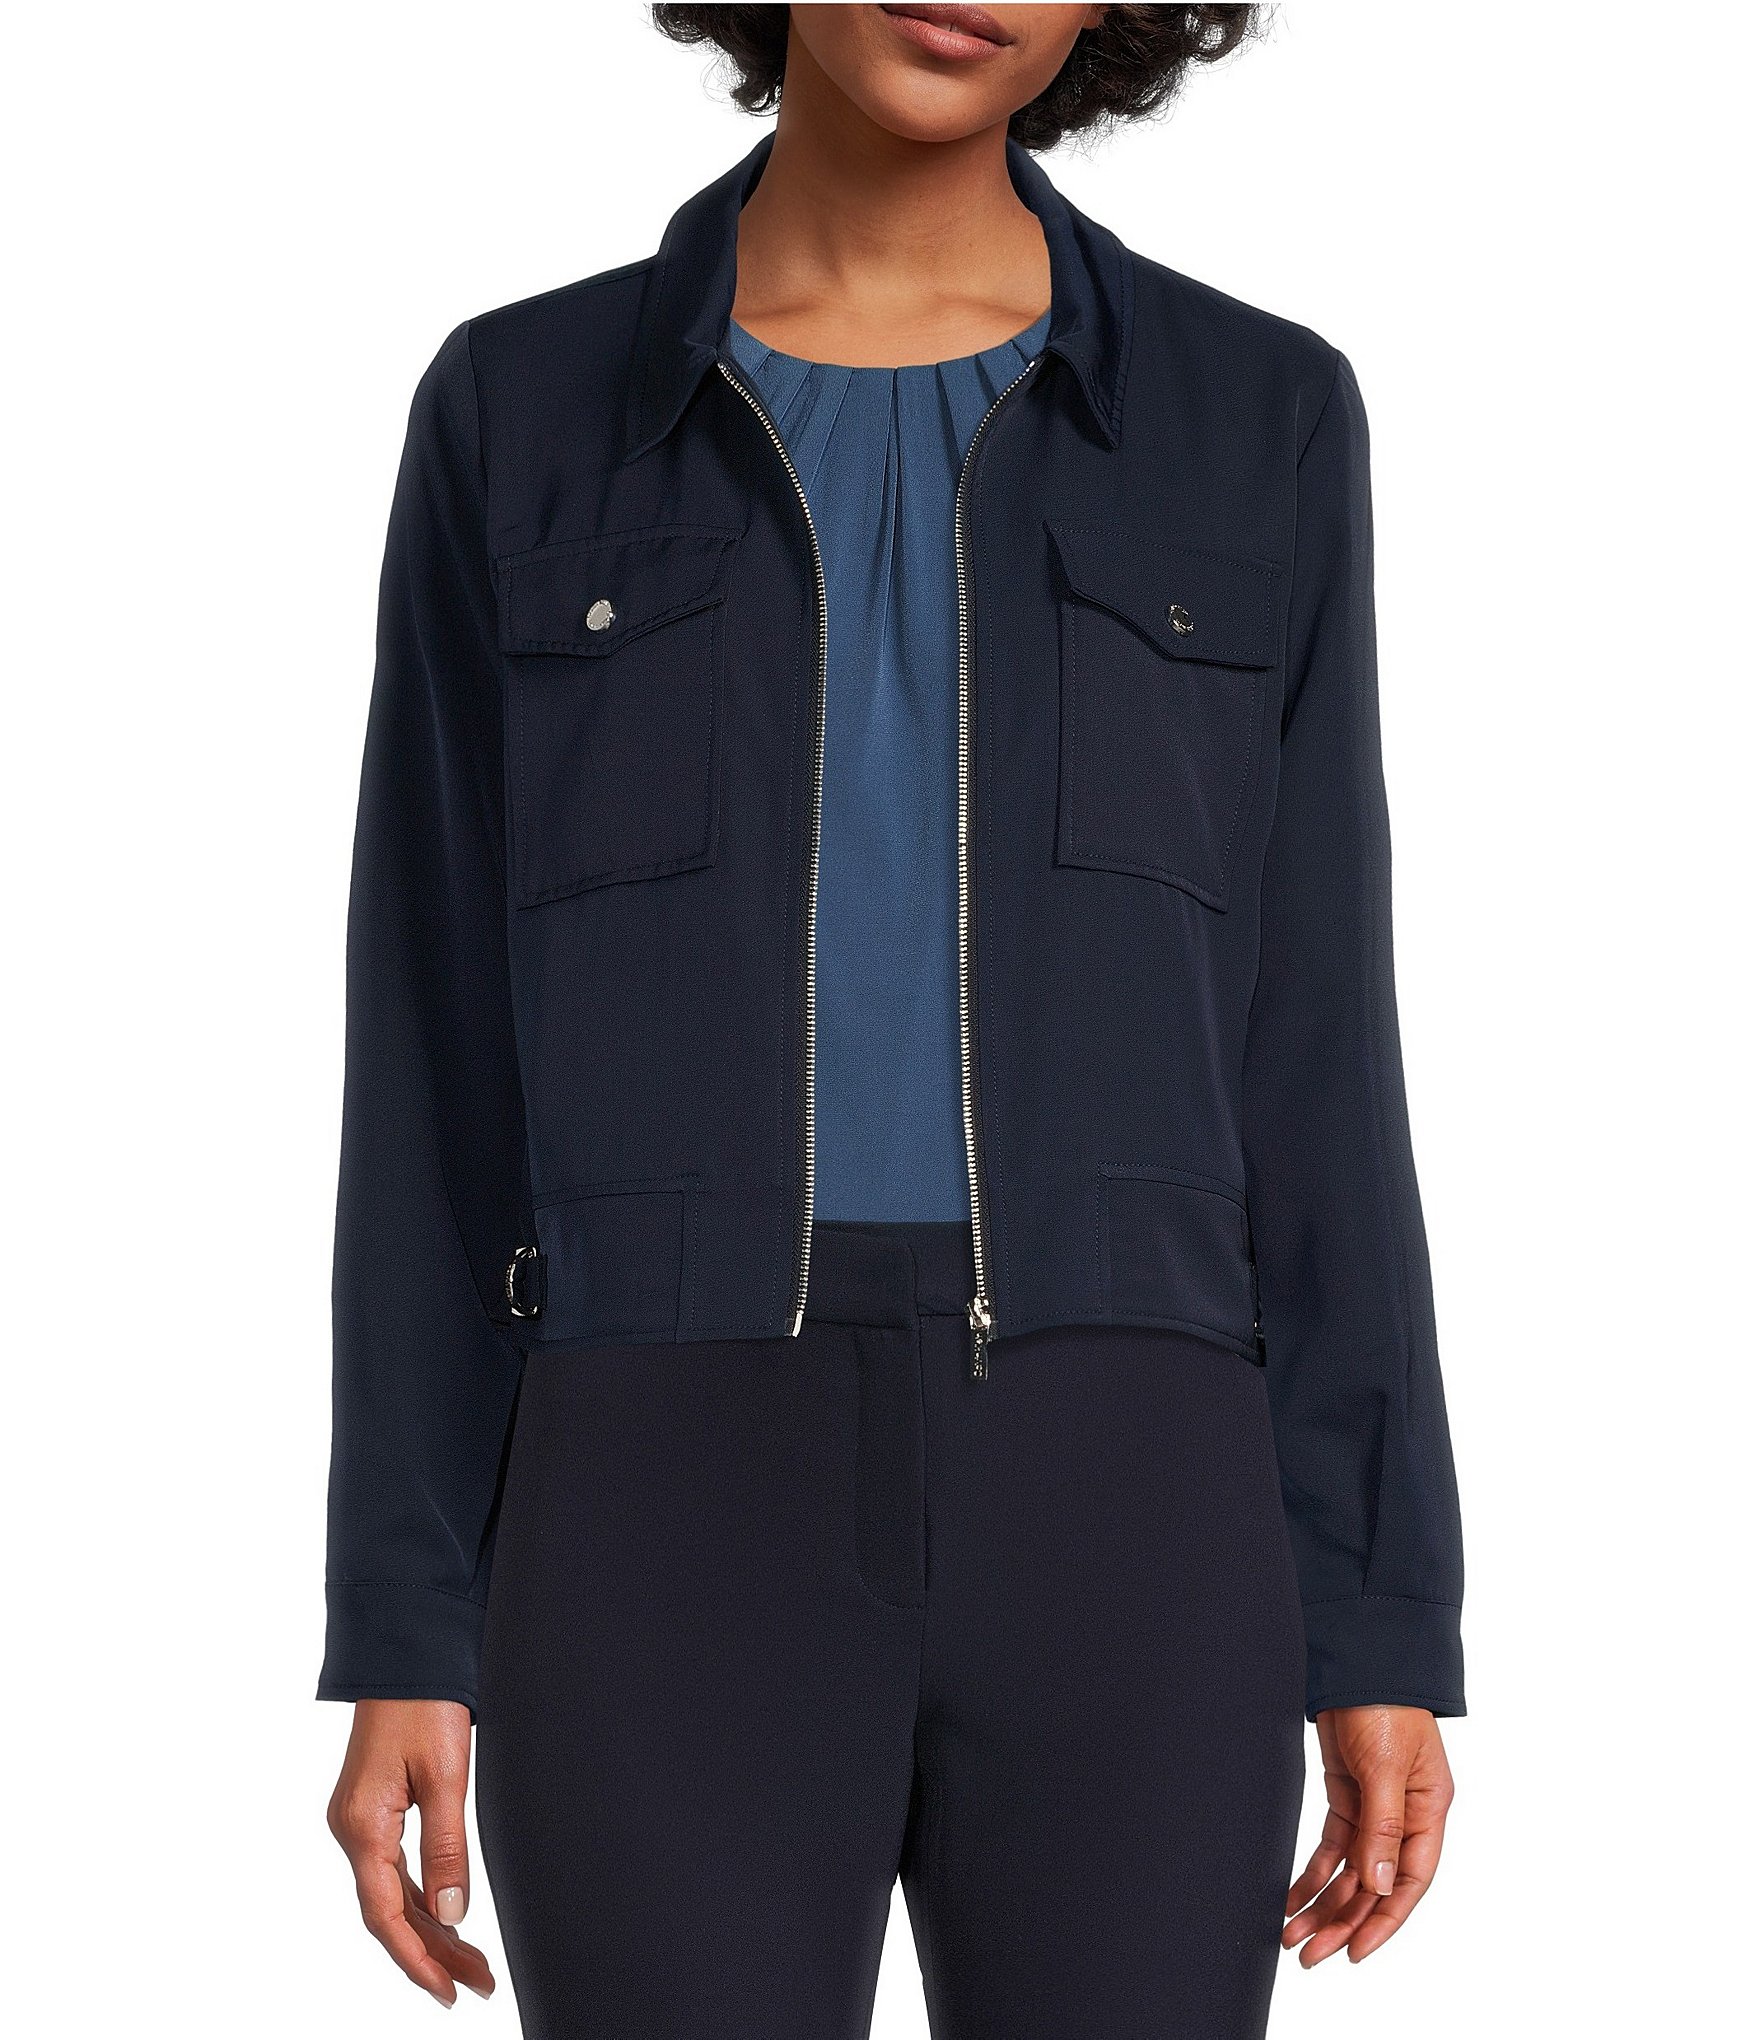 Picknicken kaas Vervelend Calvin Klein Crepe Fabrication Zip Front Jacket With Pockets | Dillard's